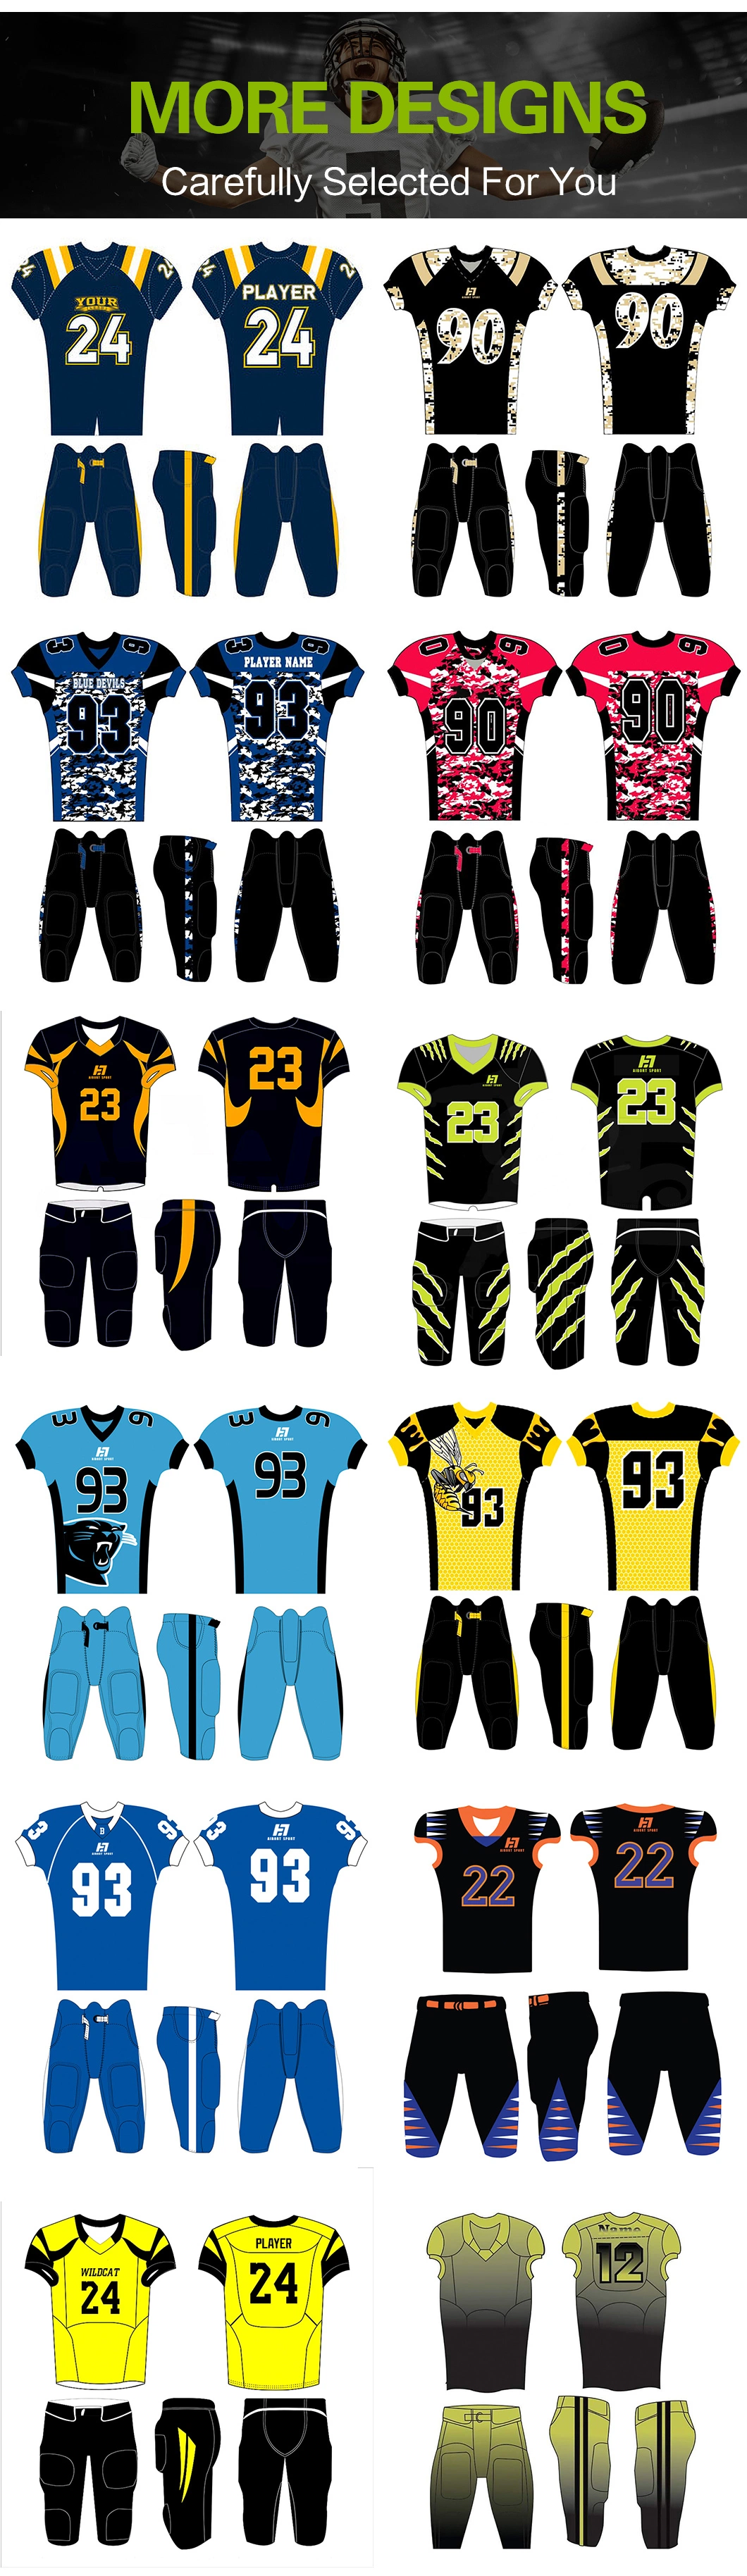 Aibort 2022 Custom Design American Football Uniform Set Sports Suit Men Sublimation Breathable Football Uniform